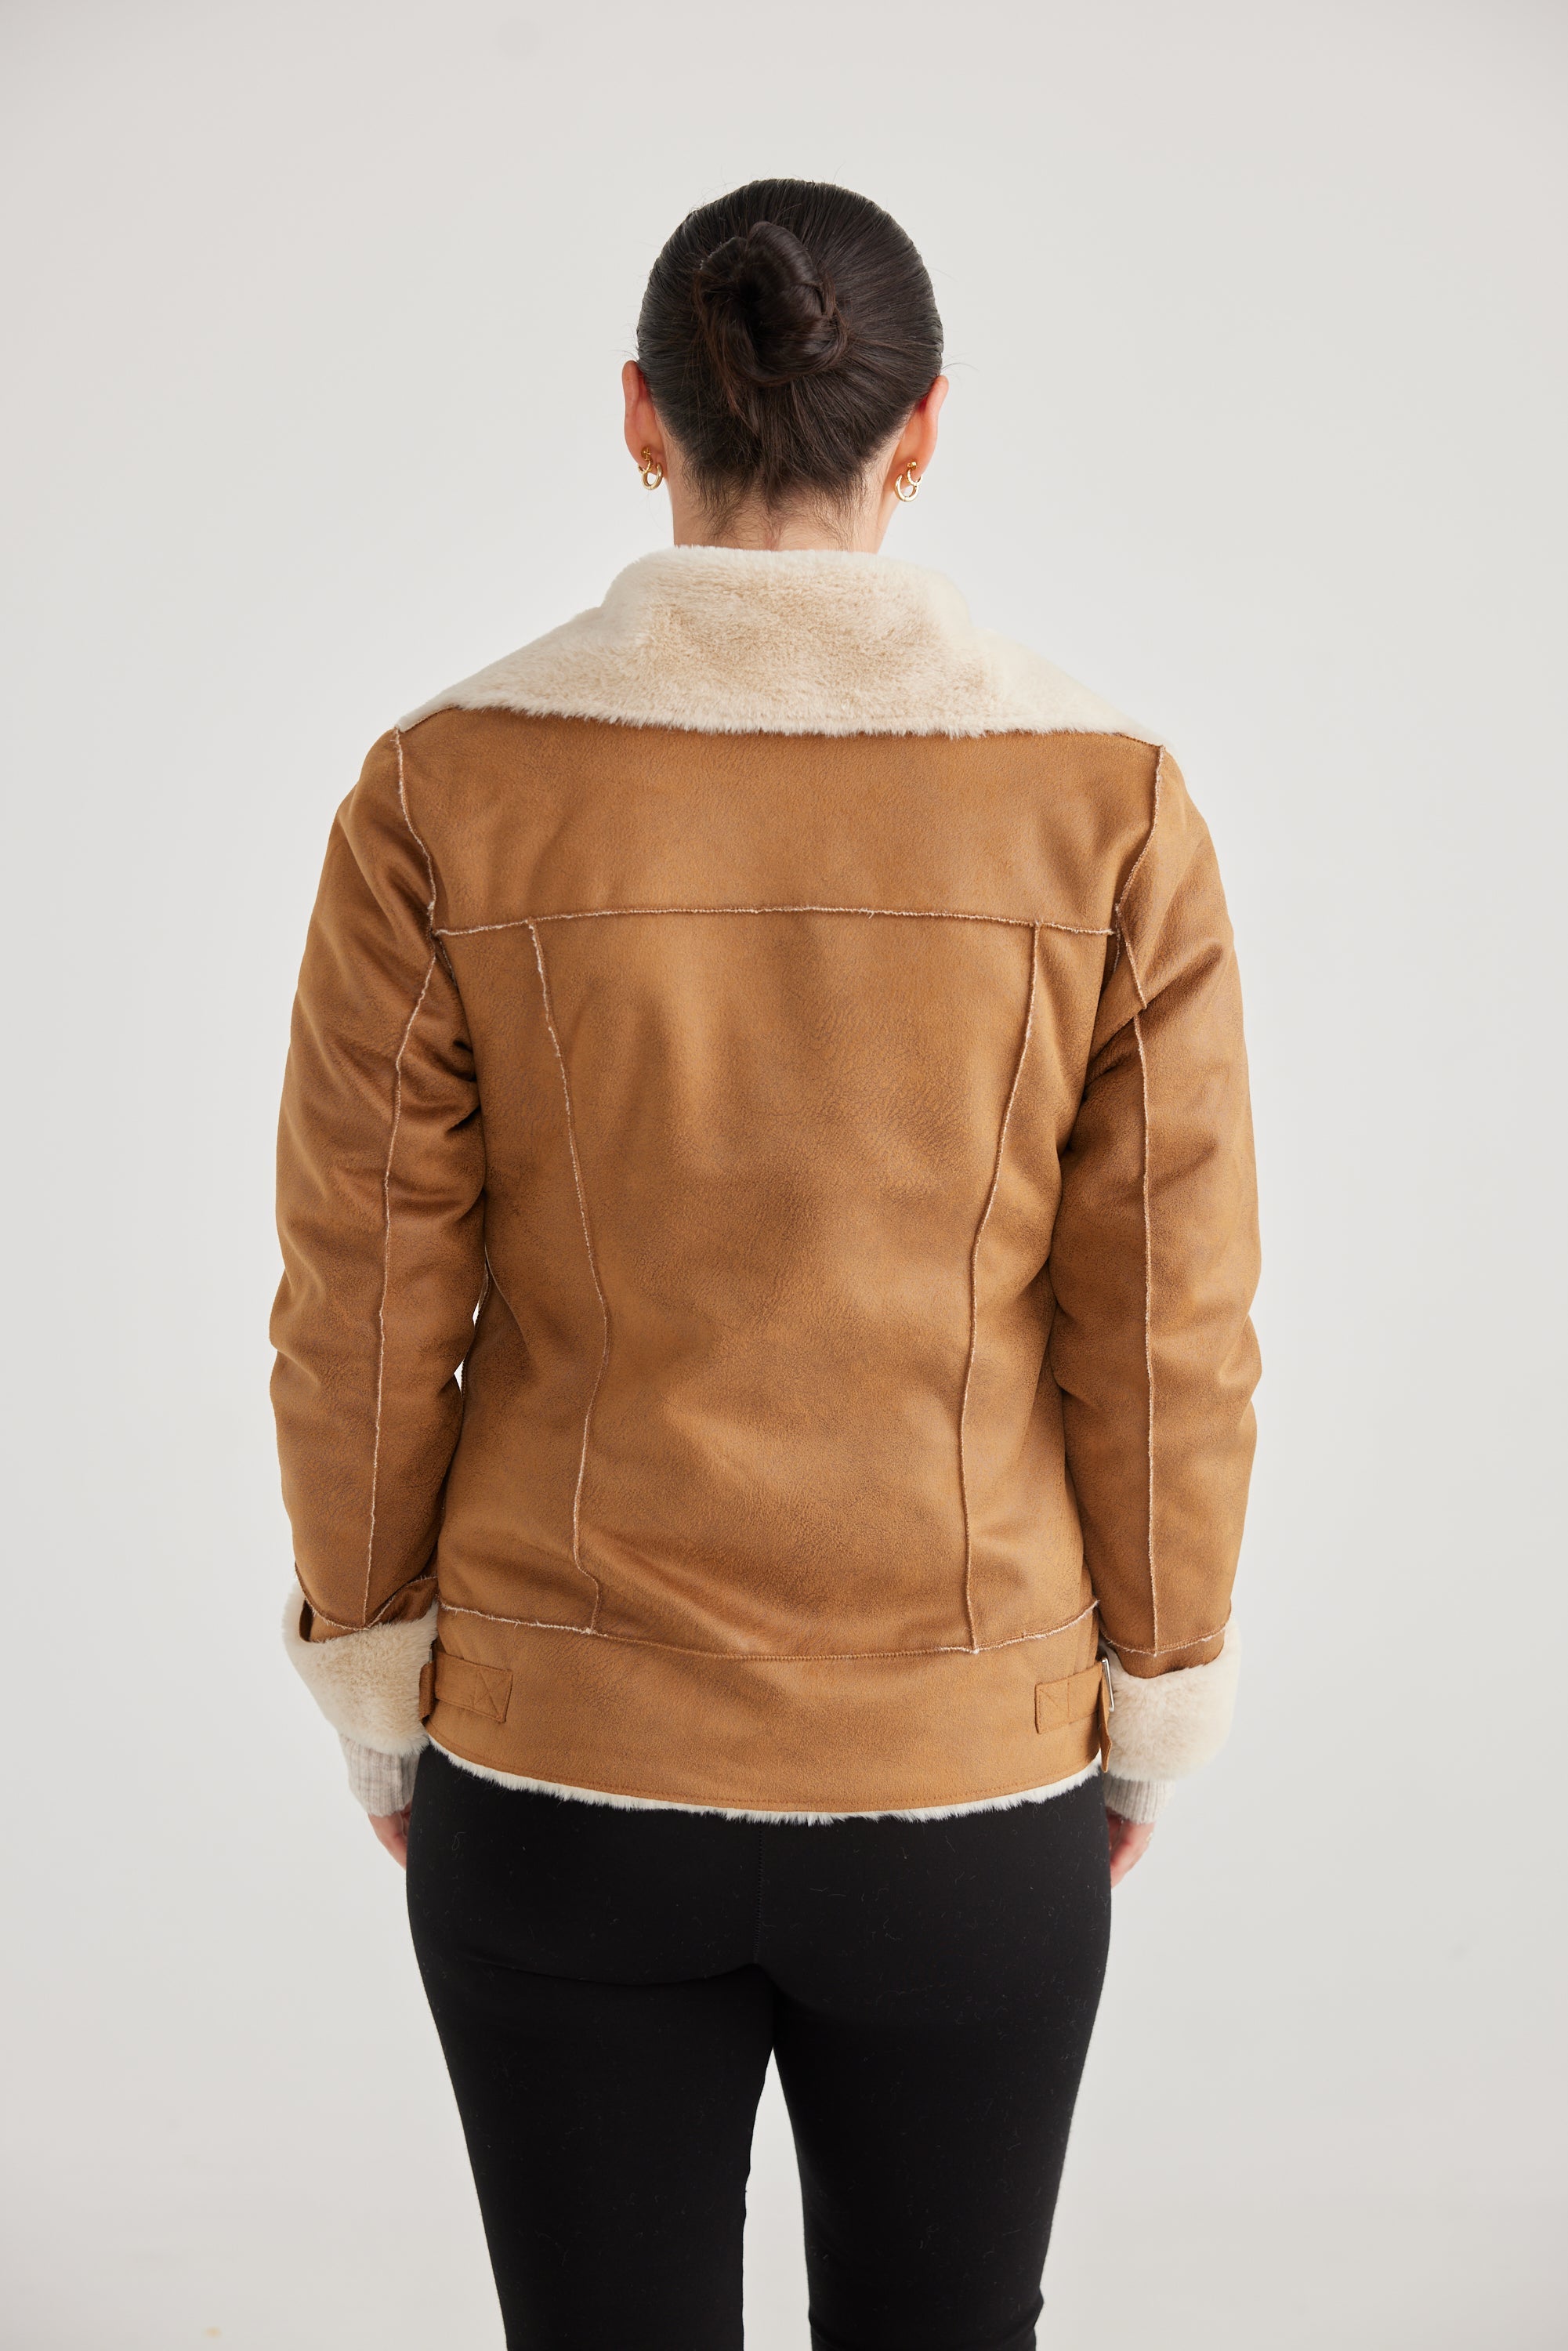 Haywood Jacket - Tan-Jackets, Coats & Vests-Brave & True-The Bay Room